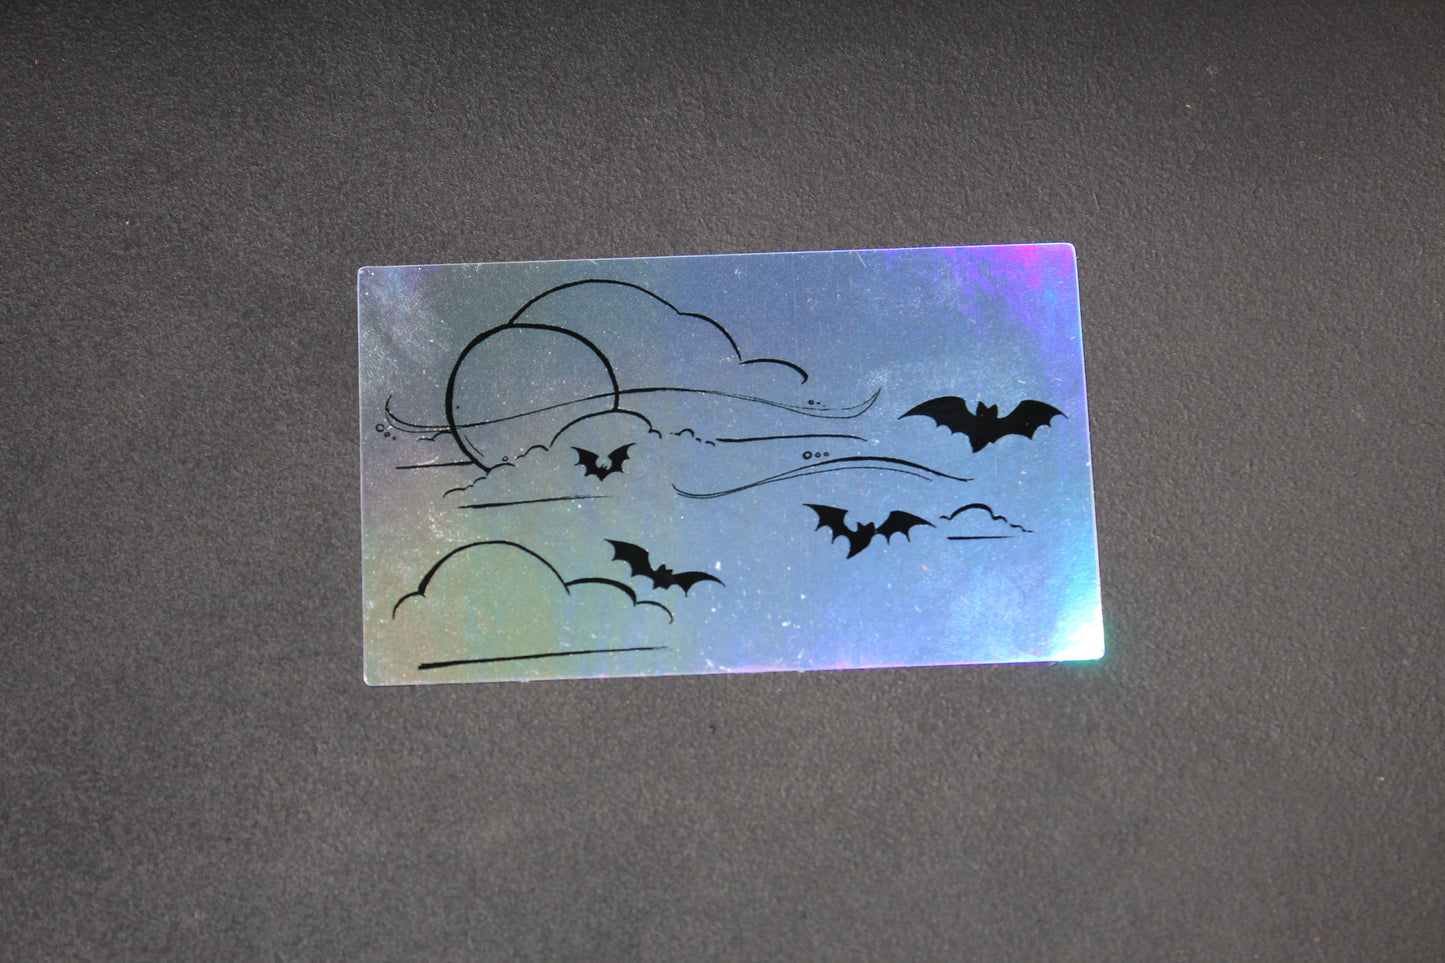 Holographic Bats in flight 4" x 2.5" Vinyl Stickers